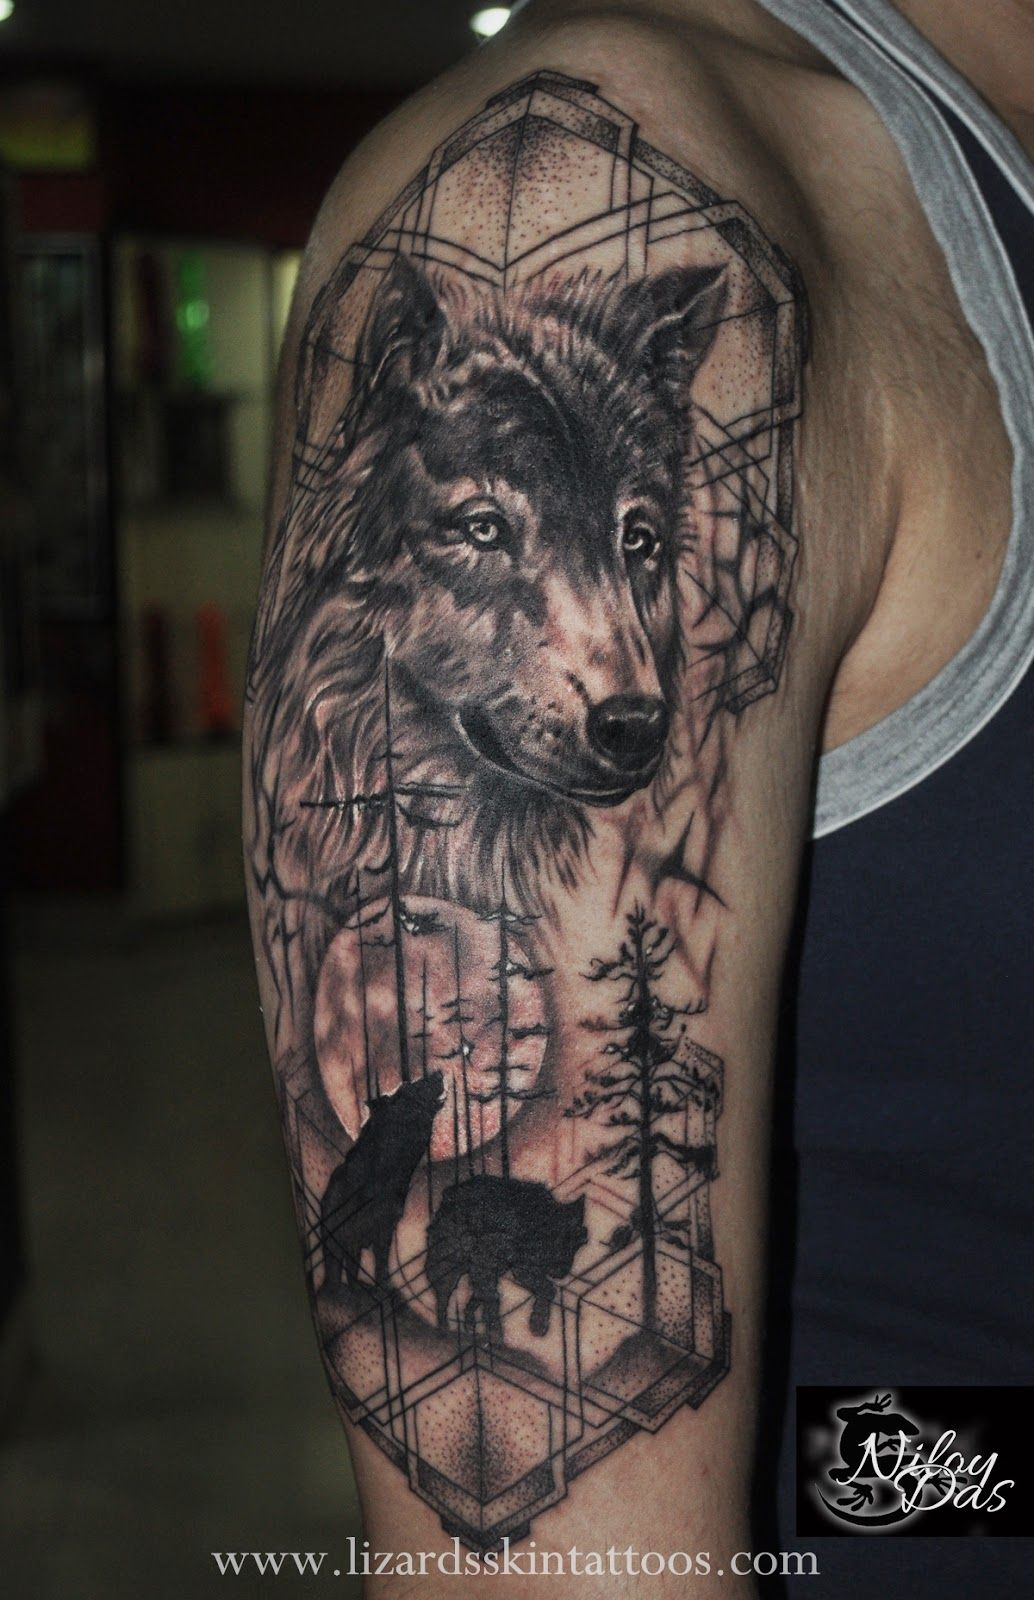 Lizards Skin Tattoos Jungle Themed Wolf Tattoo Artist Niloy Das for sizing 1034 X 1600